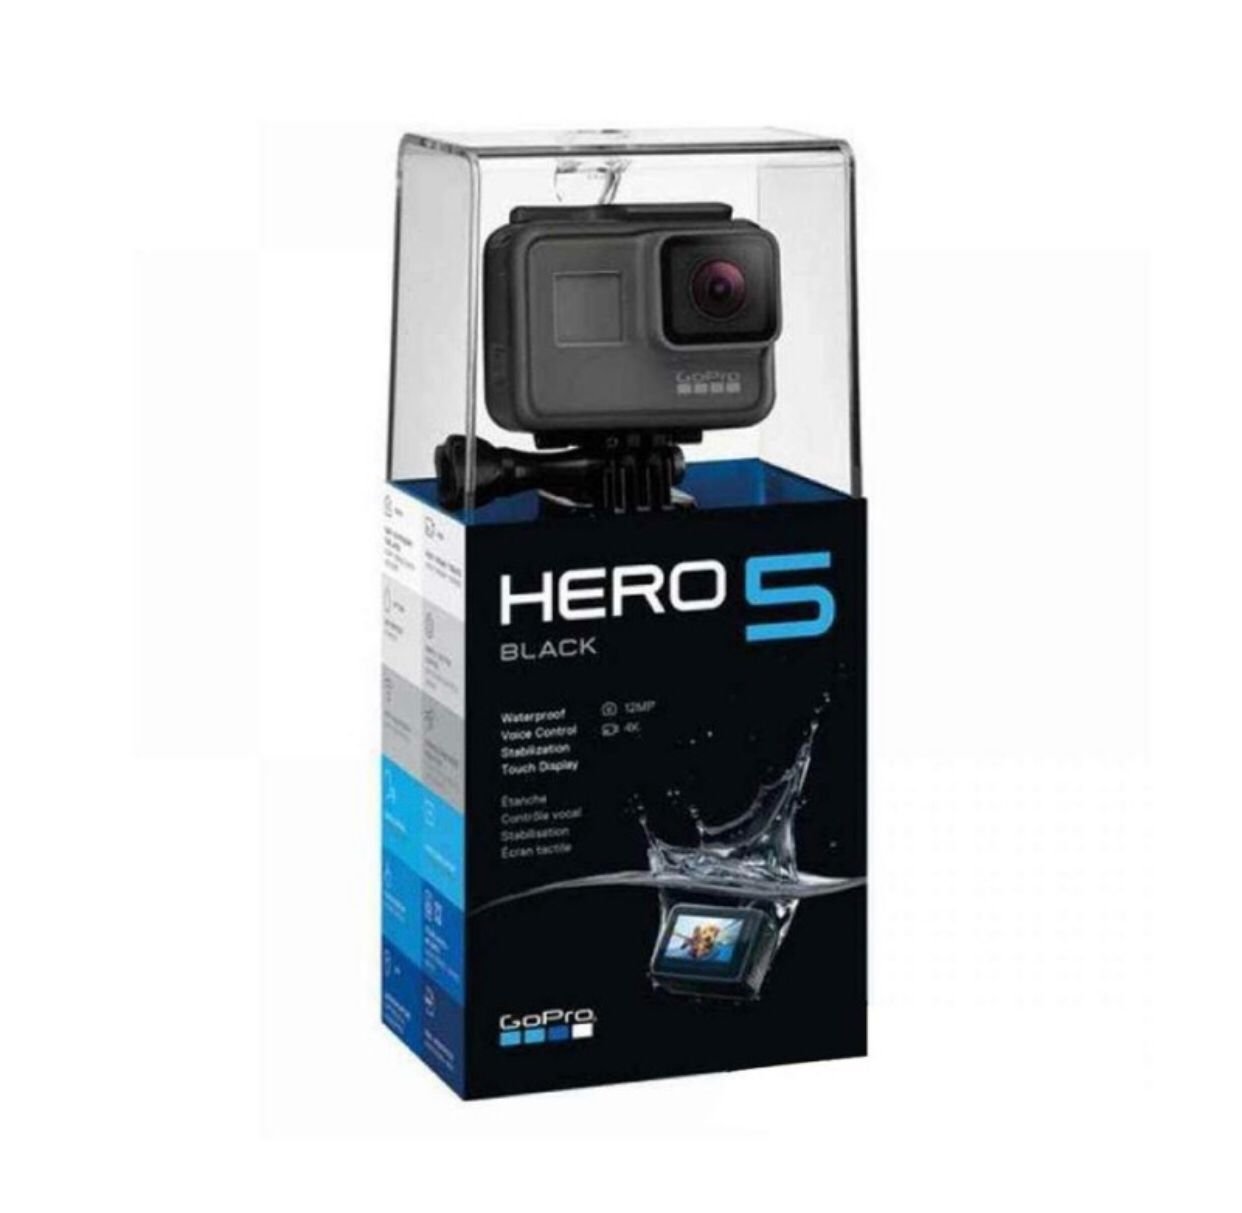 GoPro HERO5 Black – Capture Every Moment in Stunning 4K